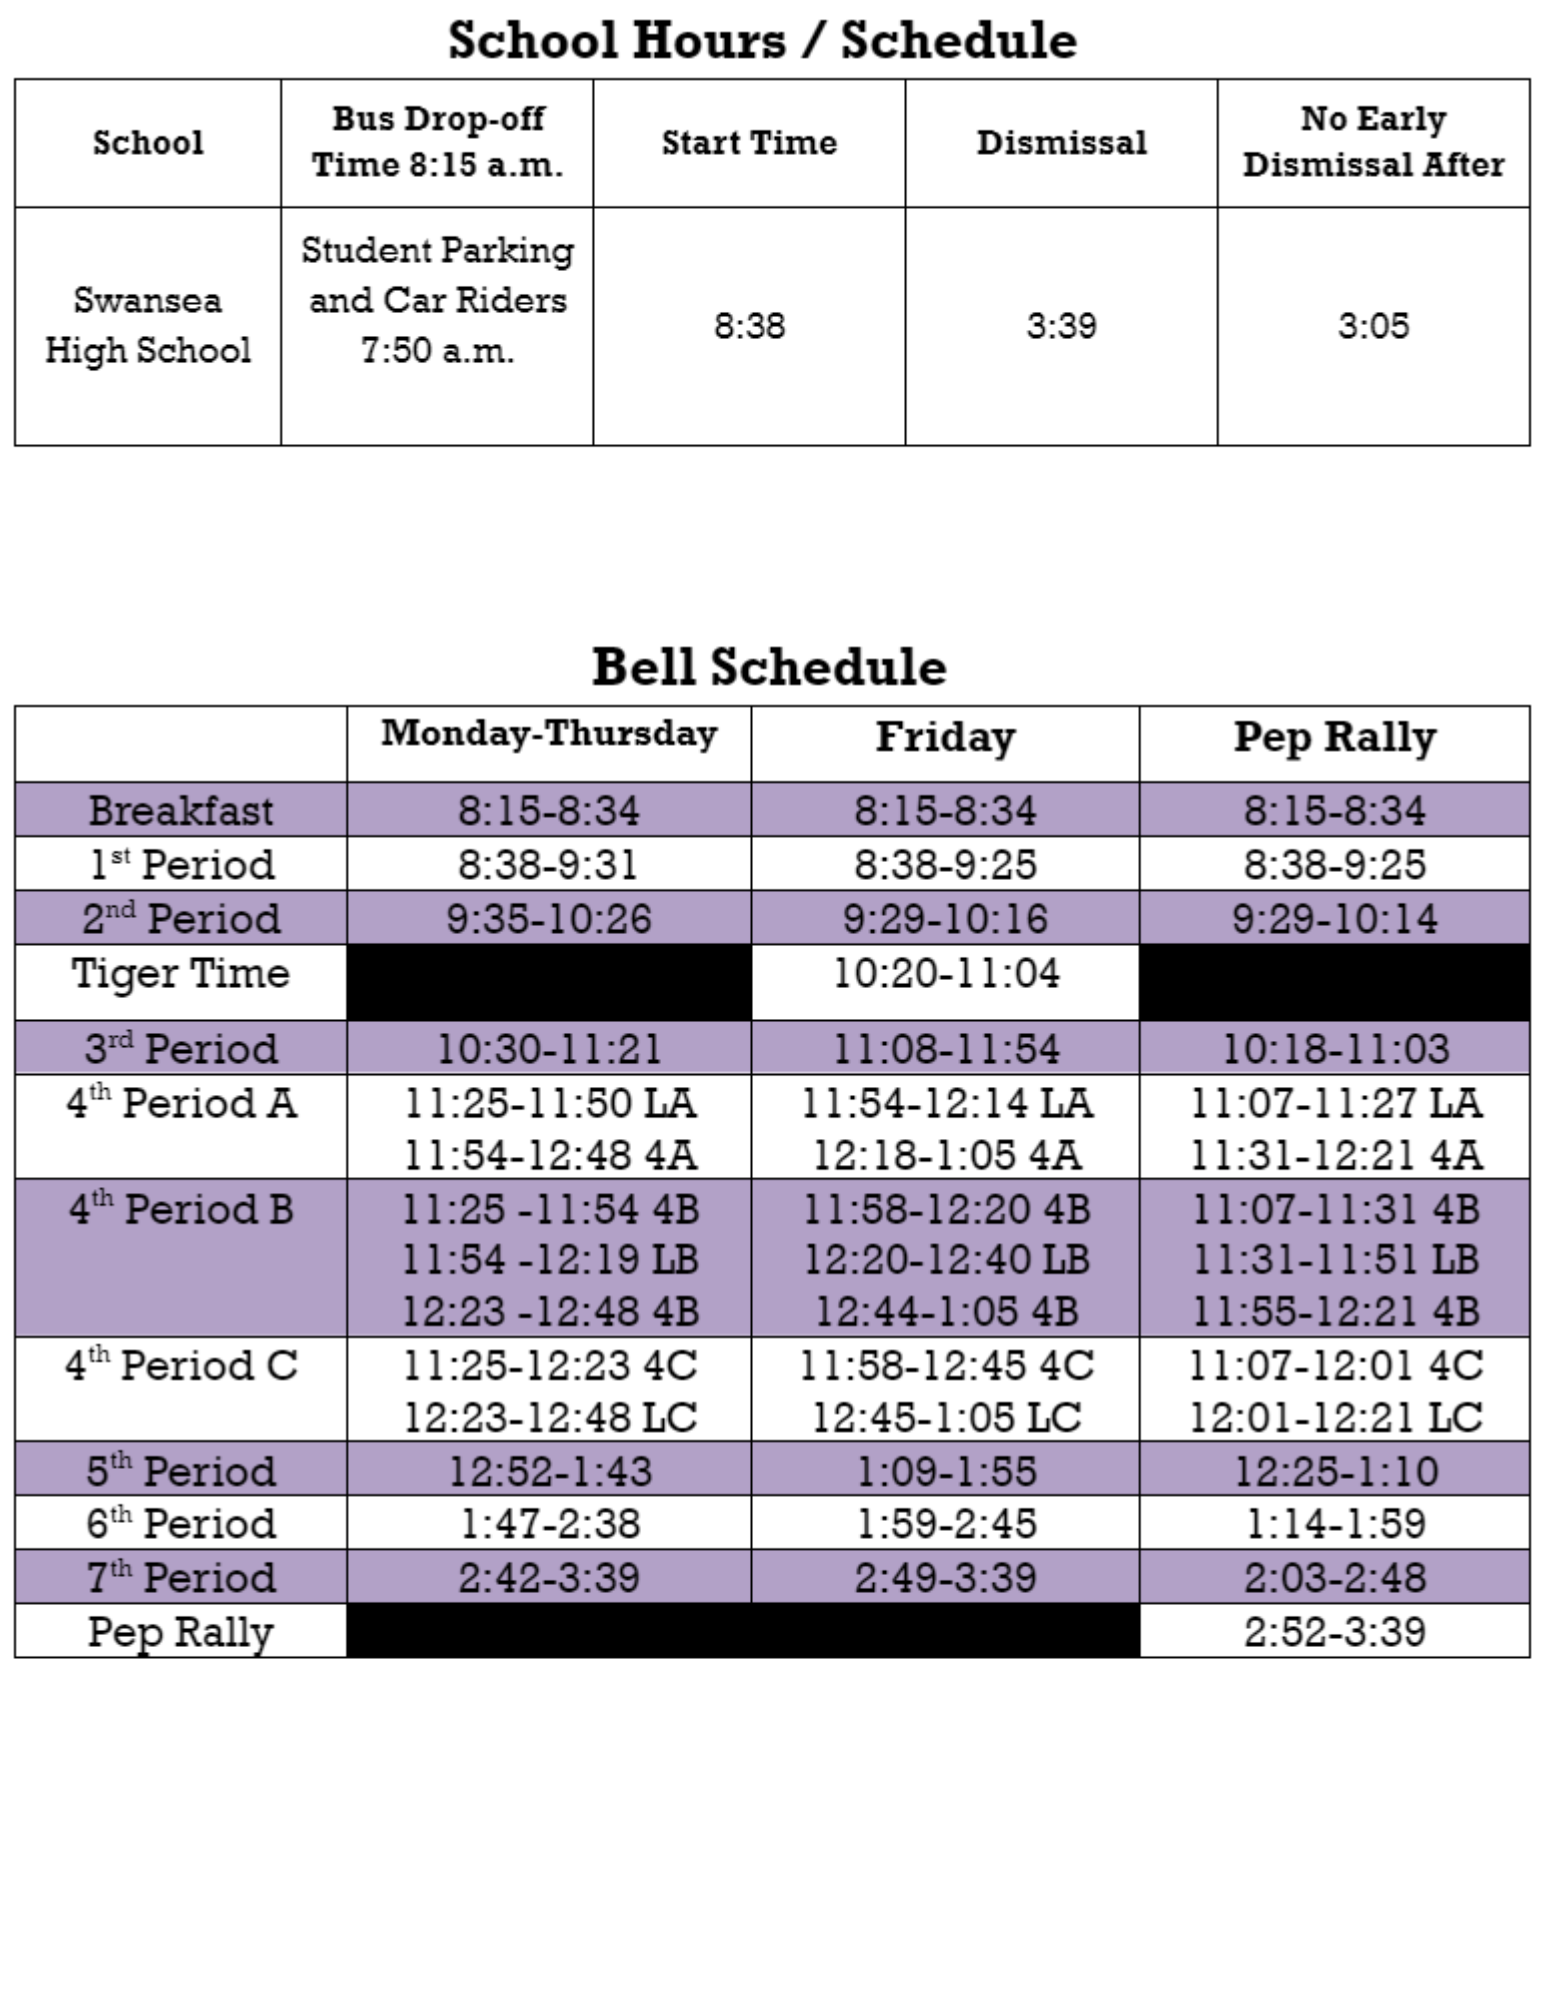 school hours and bell schedule image